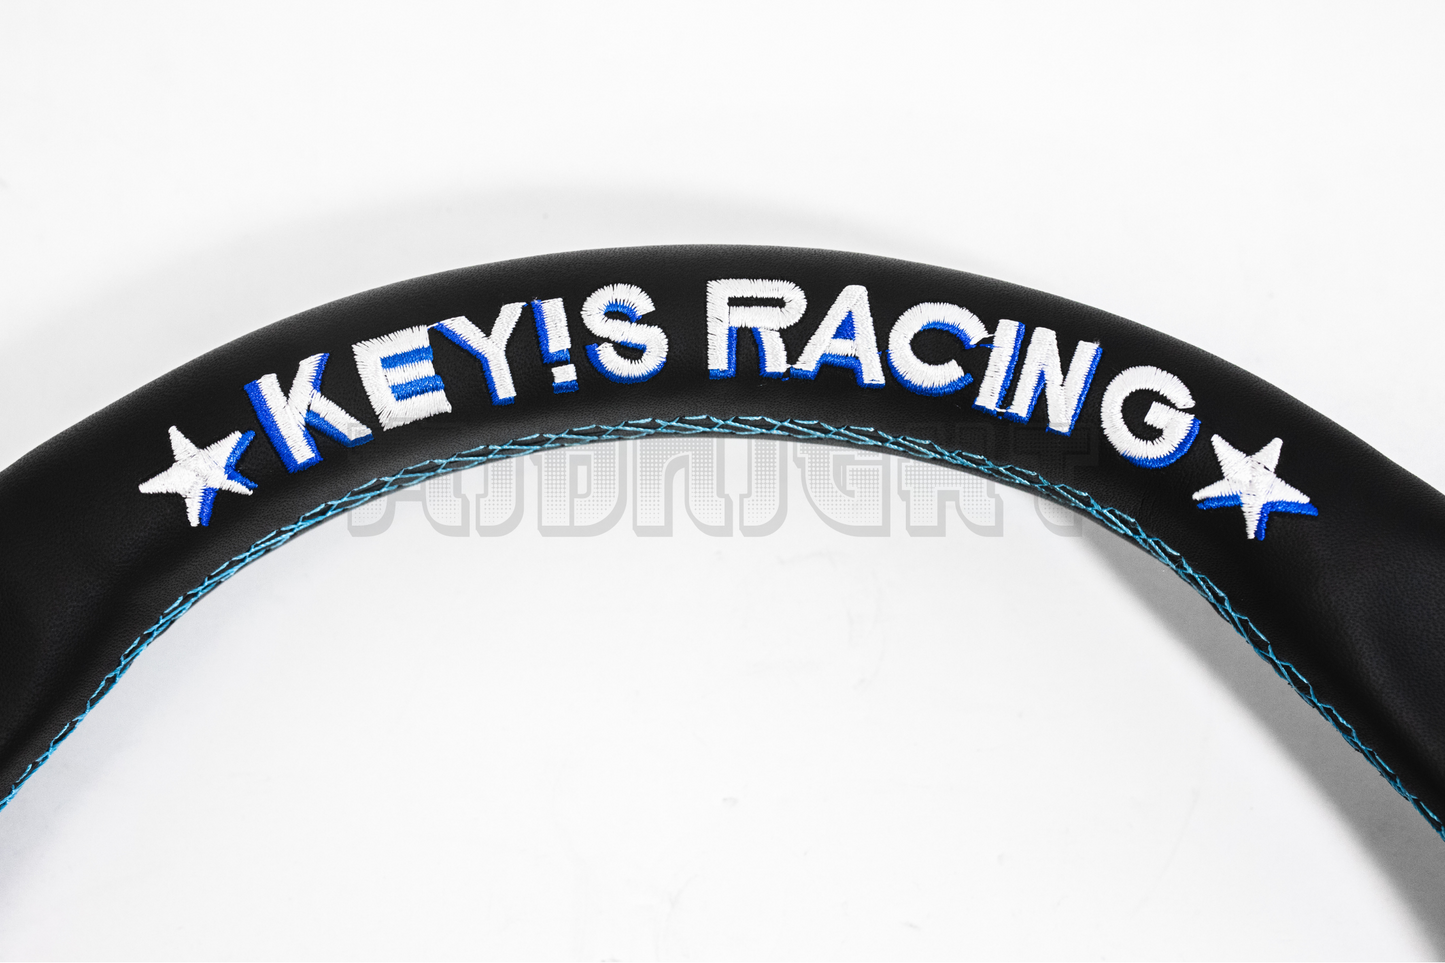 KEY'S RACING D-Shape Semi-Deep Style 340mm Leather Steering Wheel